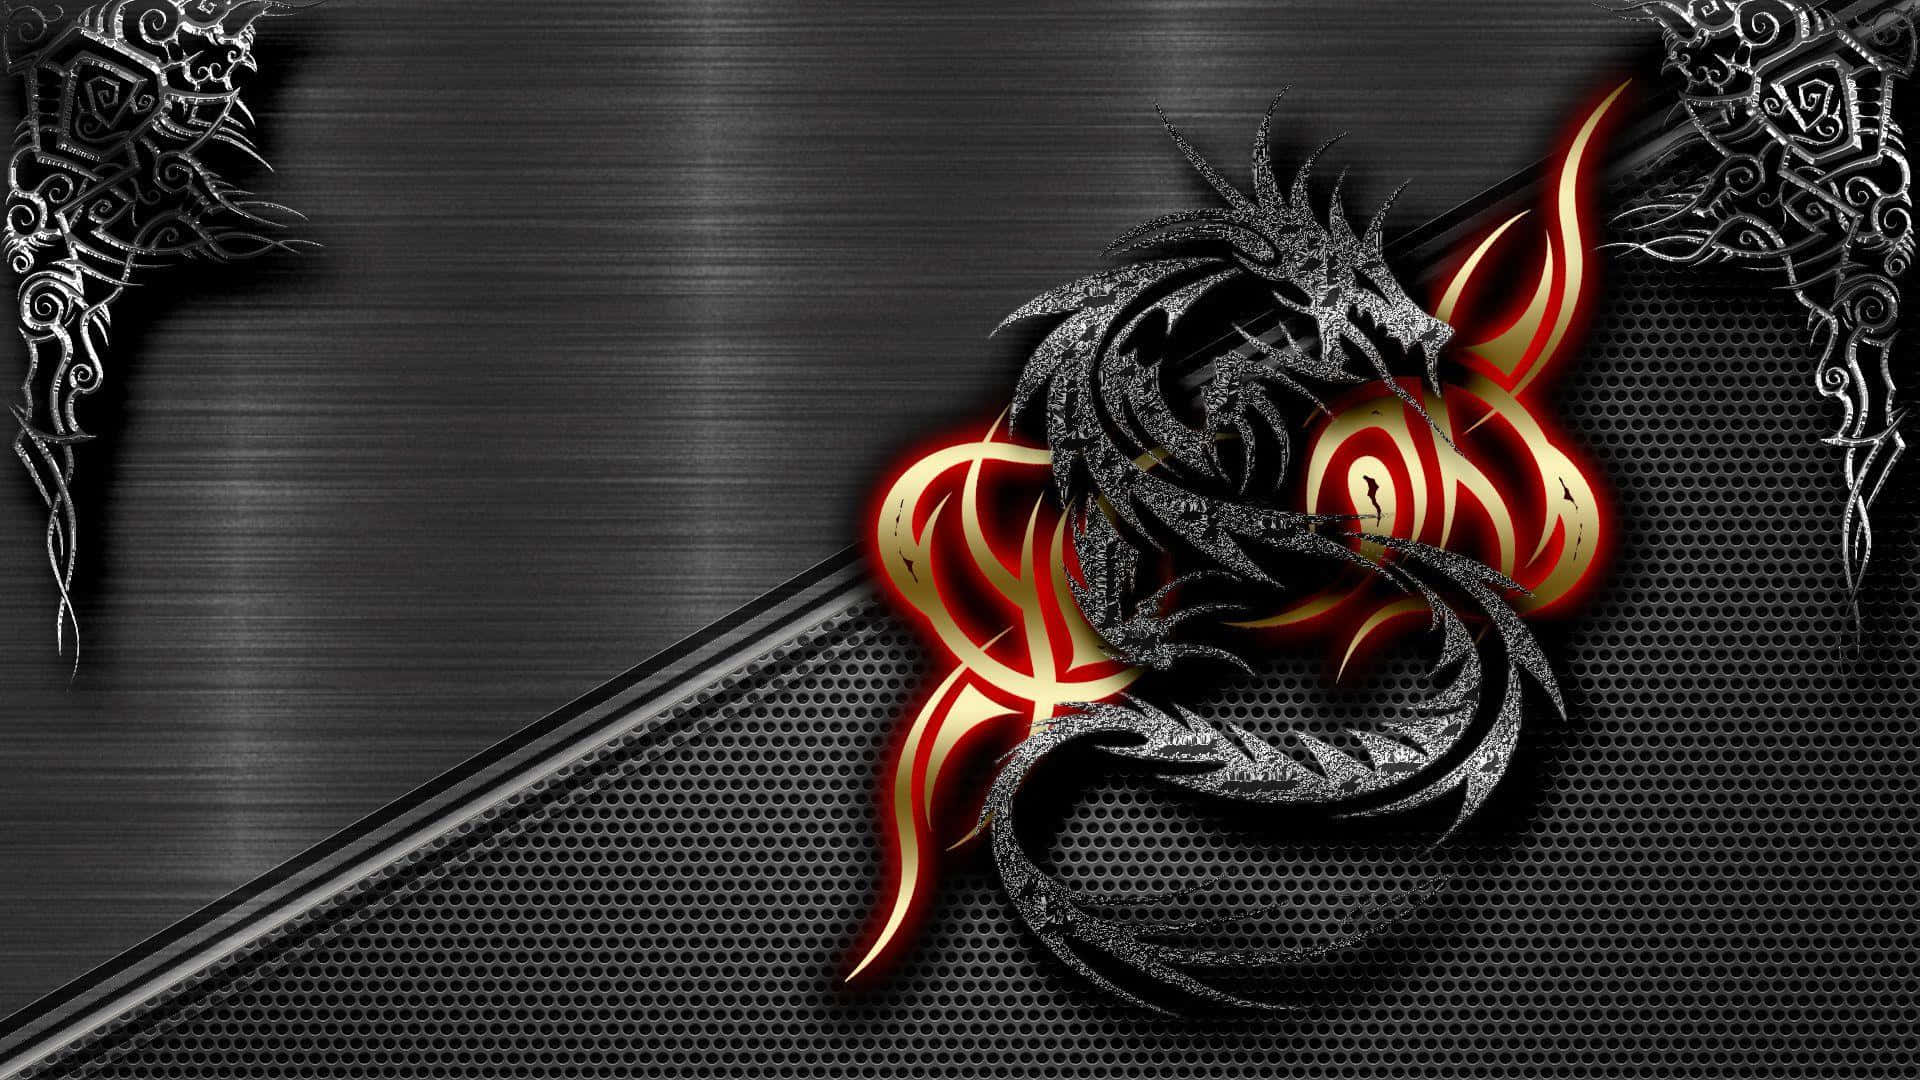 MSI Red Dragon Logo Live Wallpaper - MoeWalls